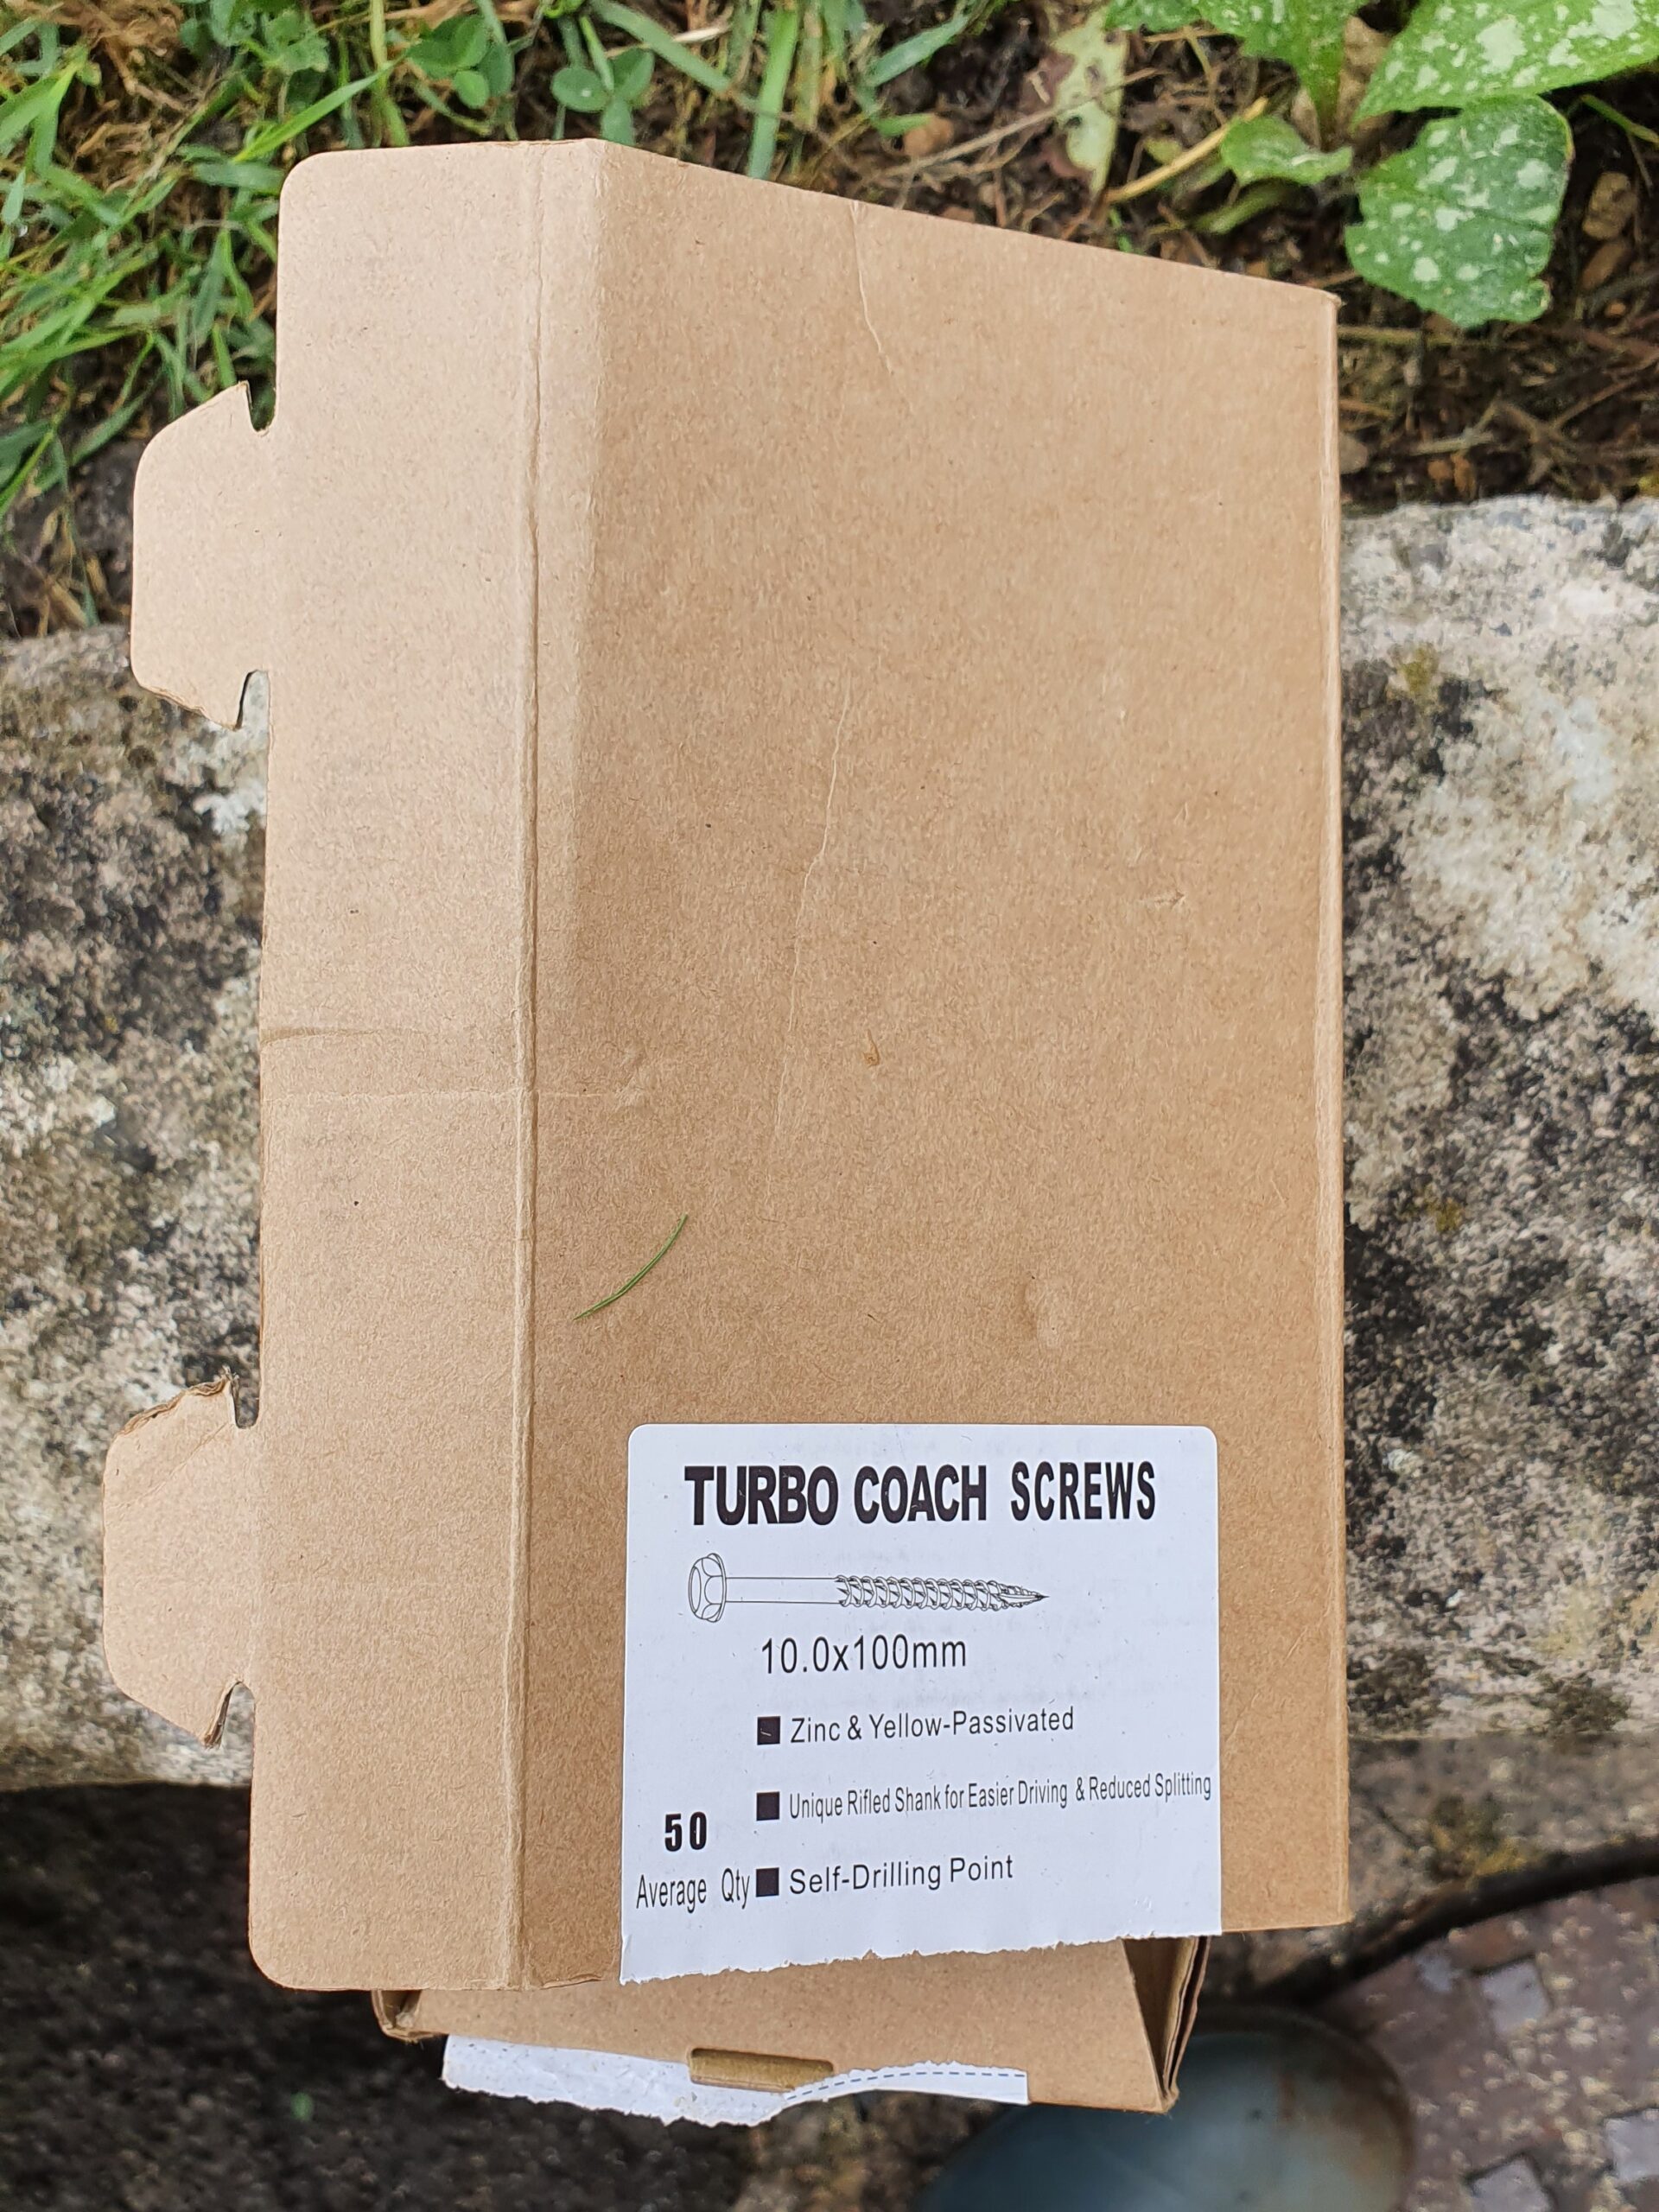 box of turbo coach screws